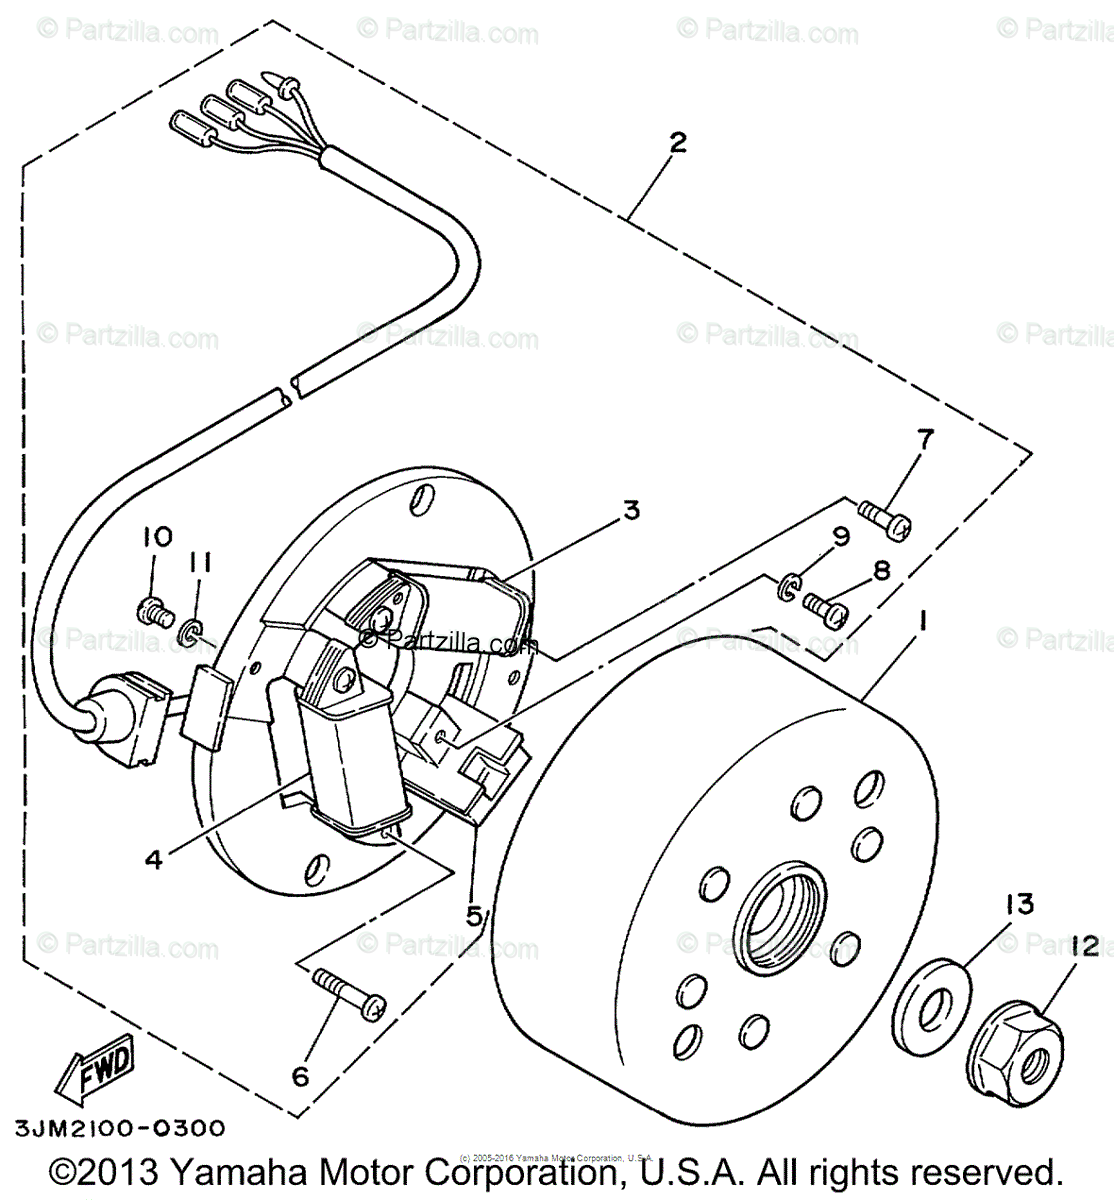 Yamaha ATV 1999 OEM Parts Diagram for Generator | Partzilla.com